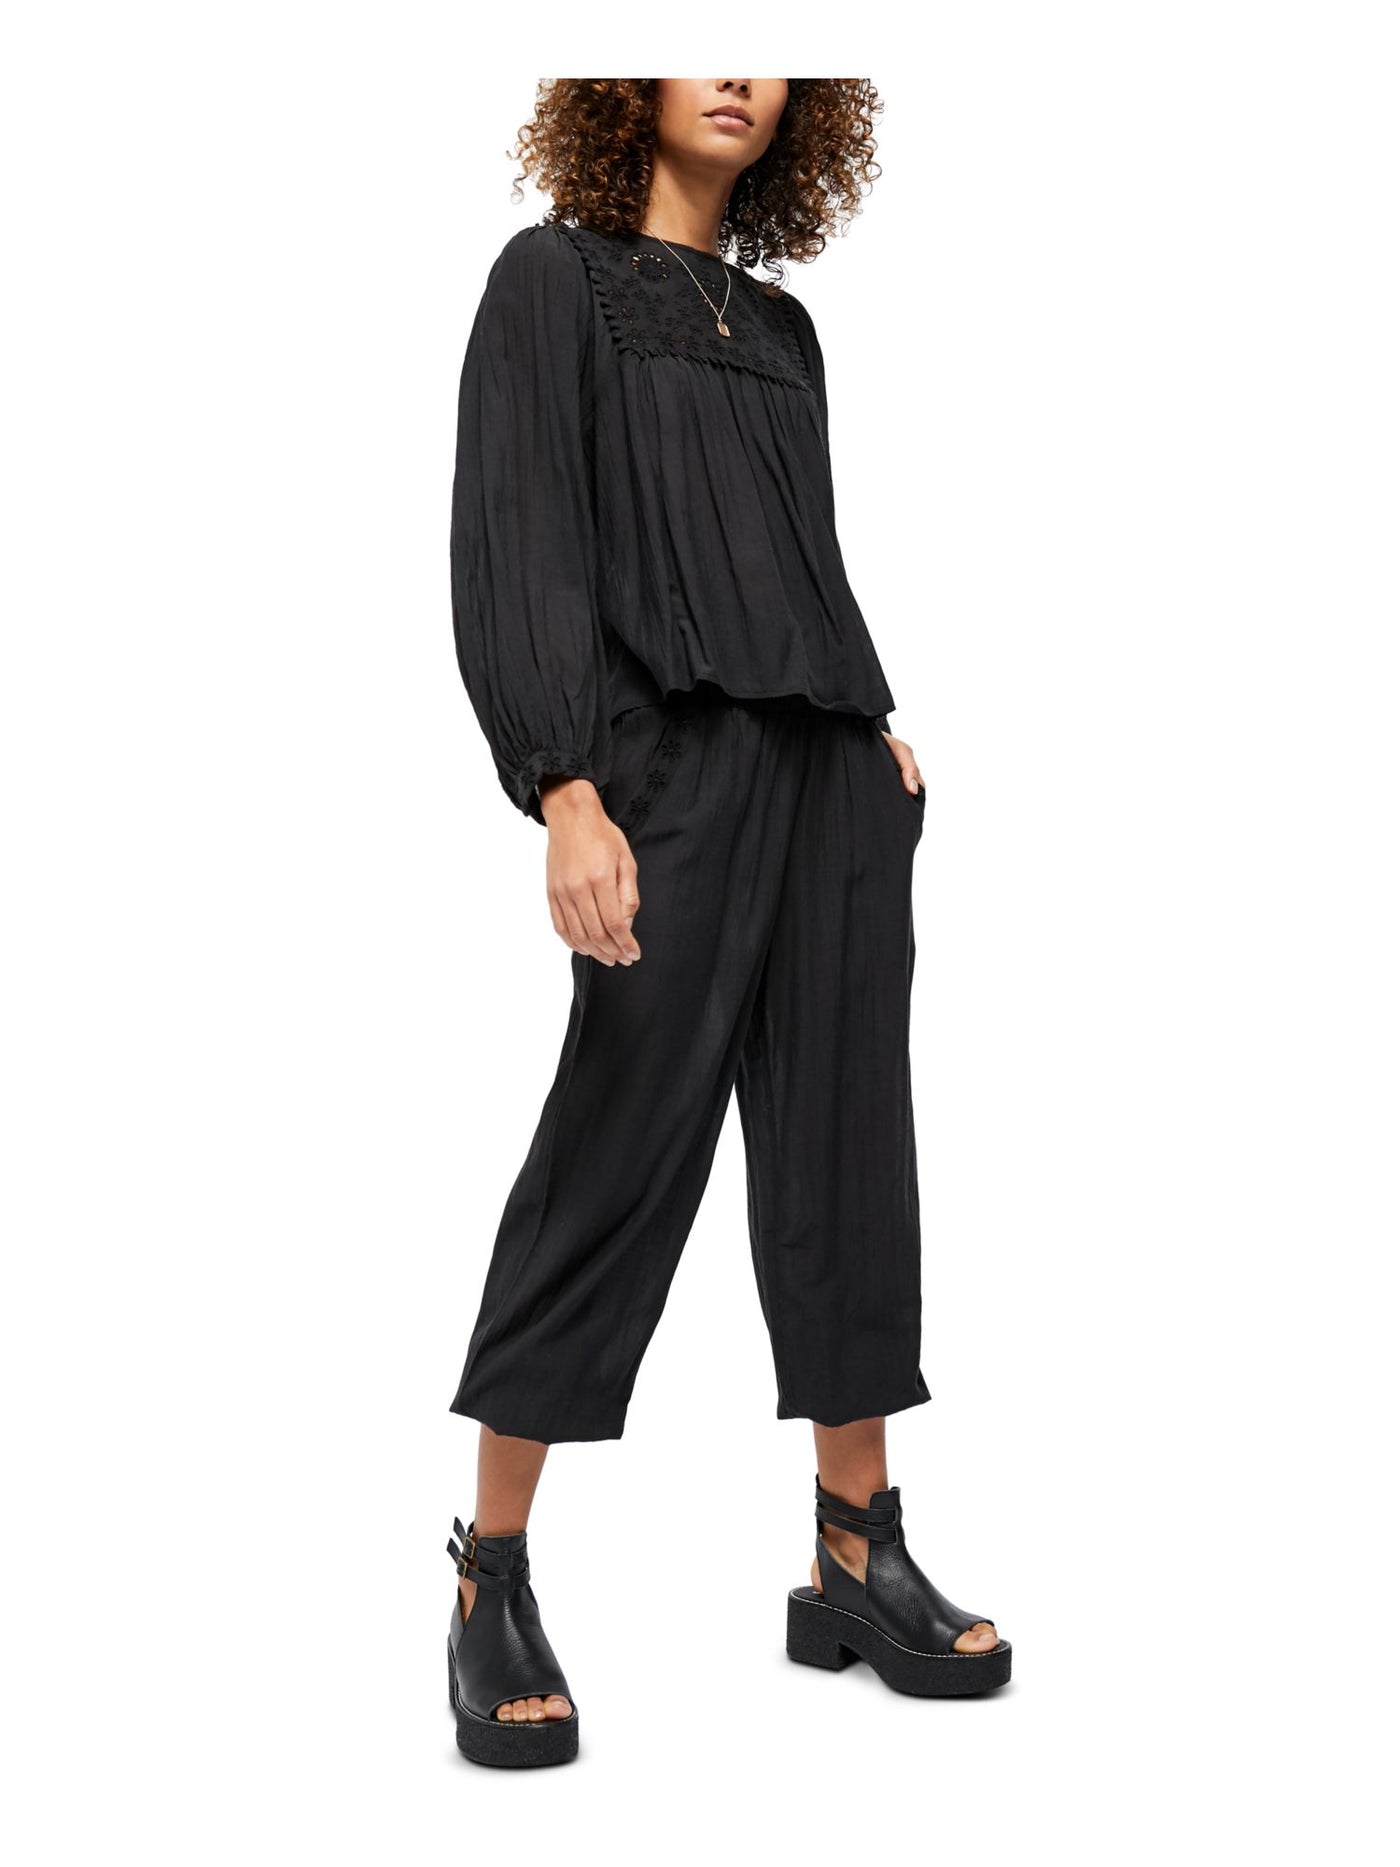 FREE PEOPLE Womens Black Heather Evening Cuffed Pants M